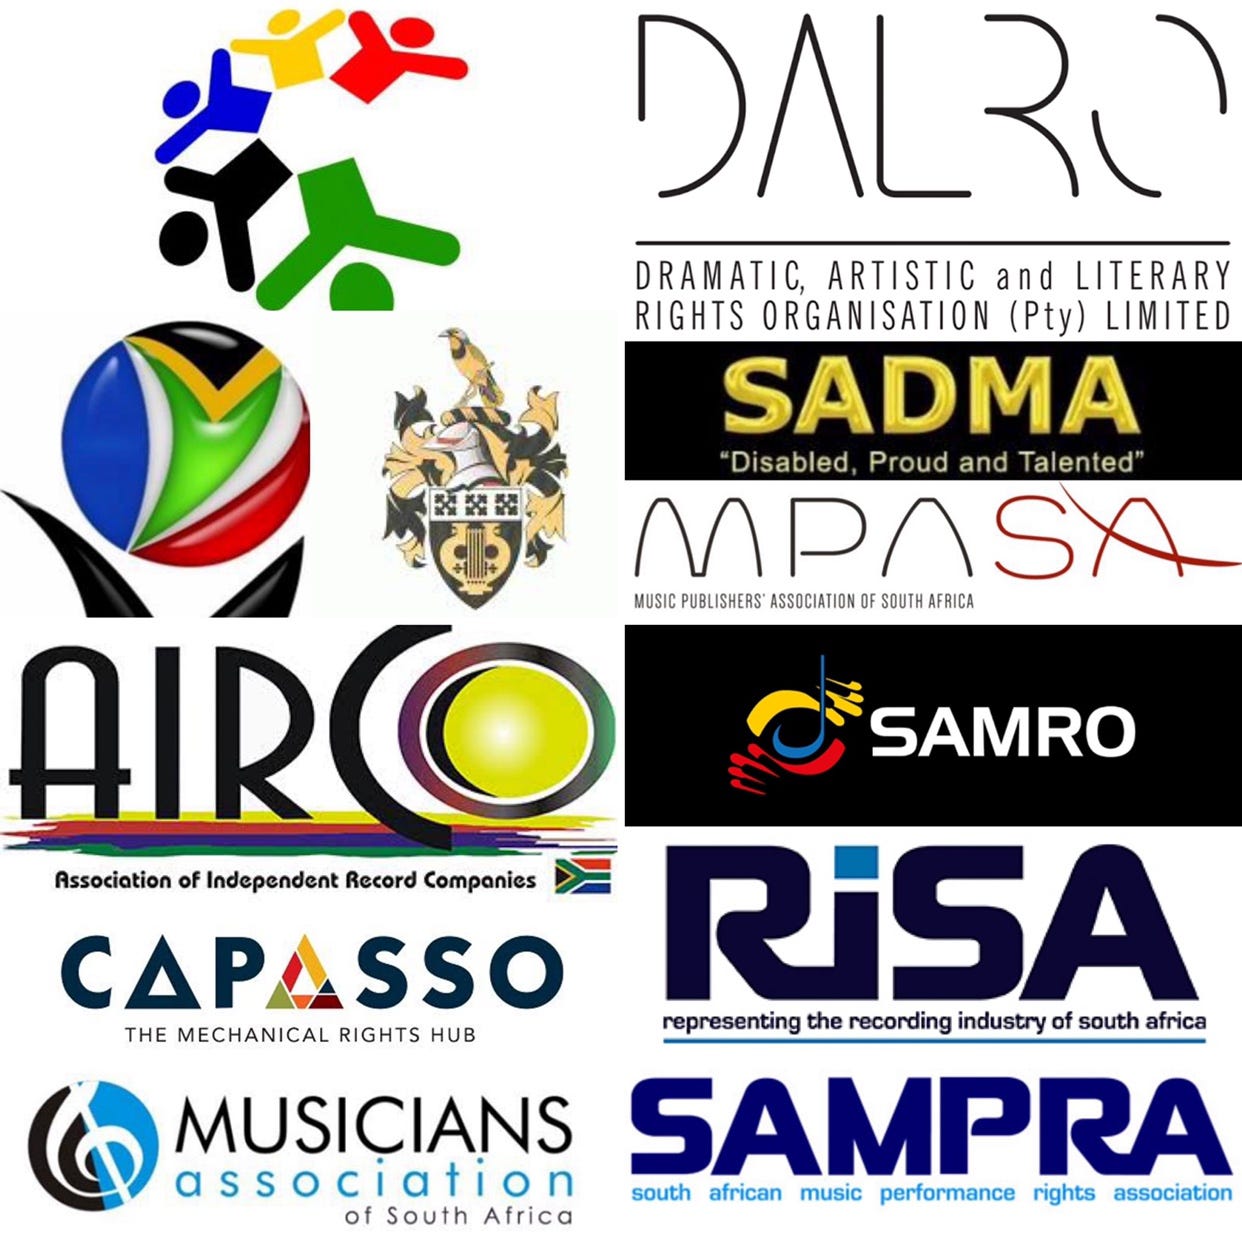 SA Music Industry Societies. by Sheldon Rocha Leal | by Sheldon Rocha Leal,  PhD | Medium